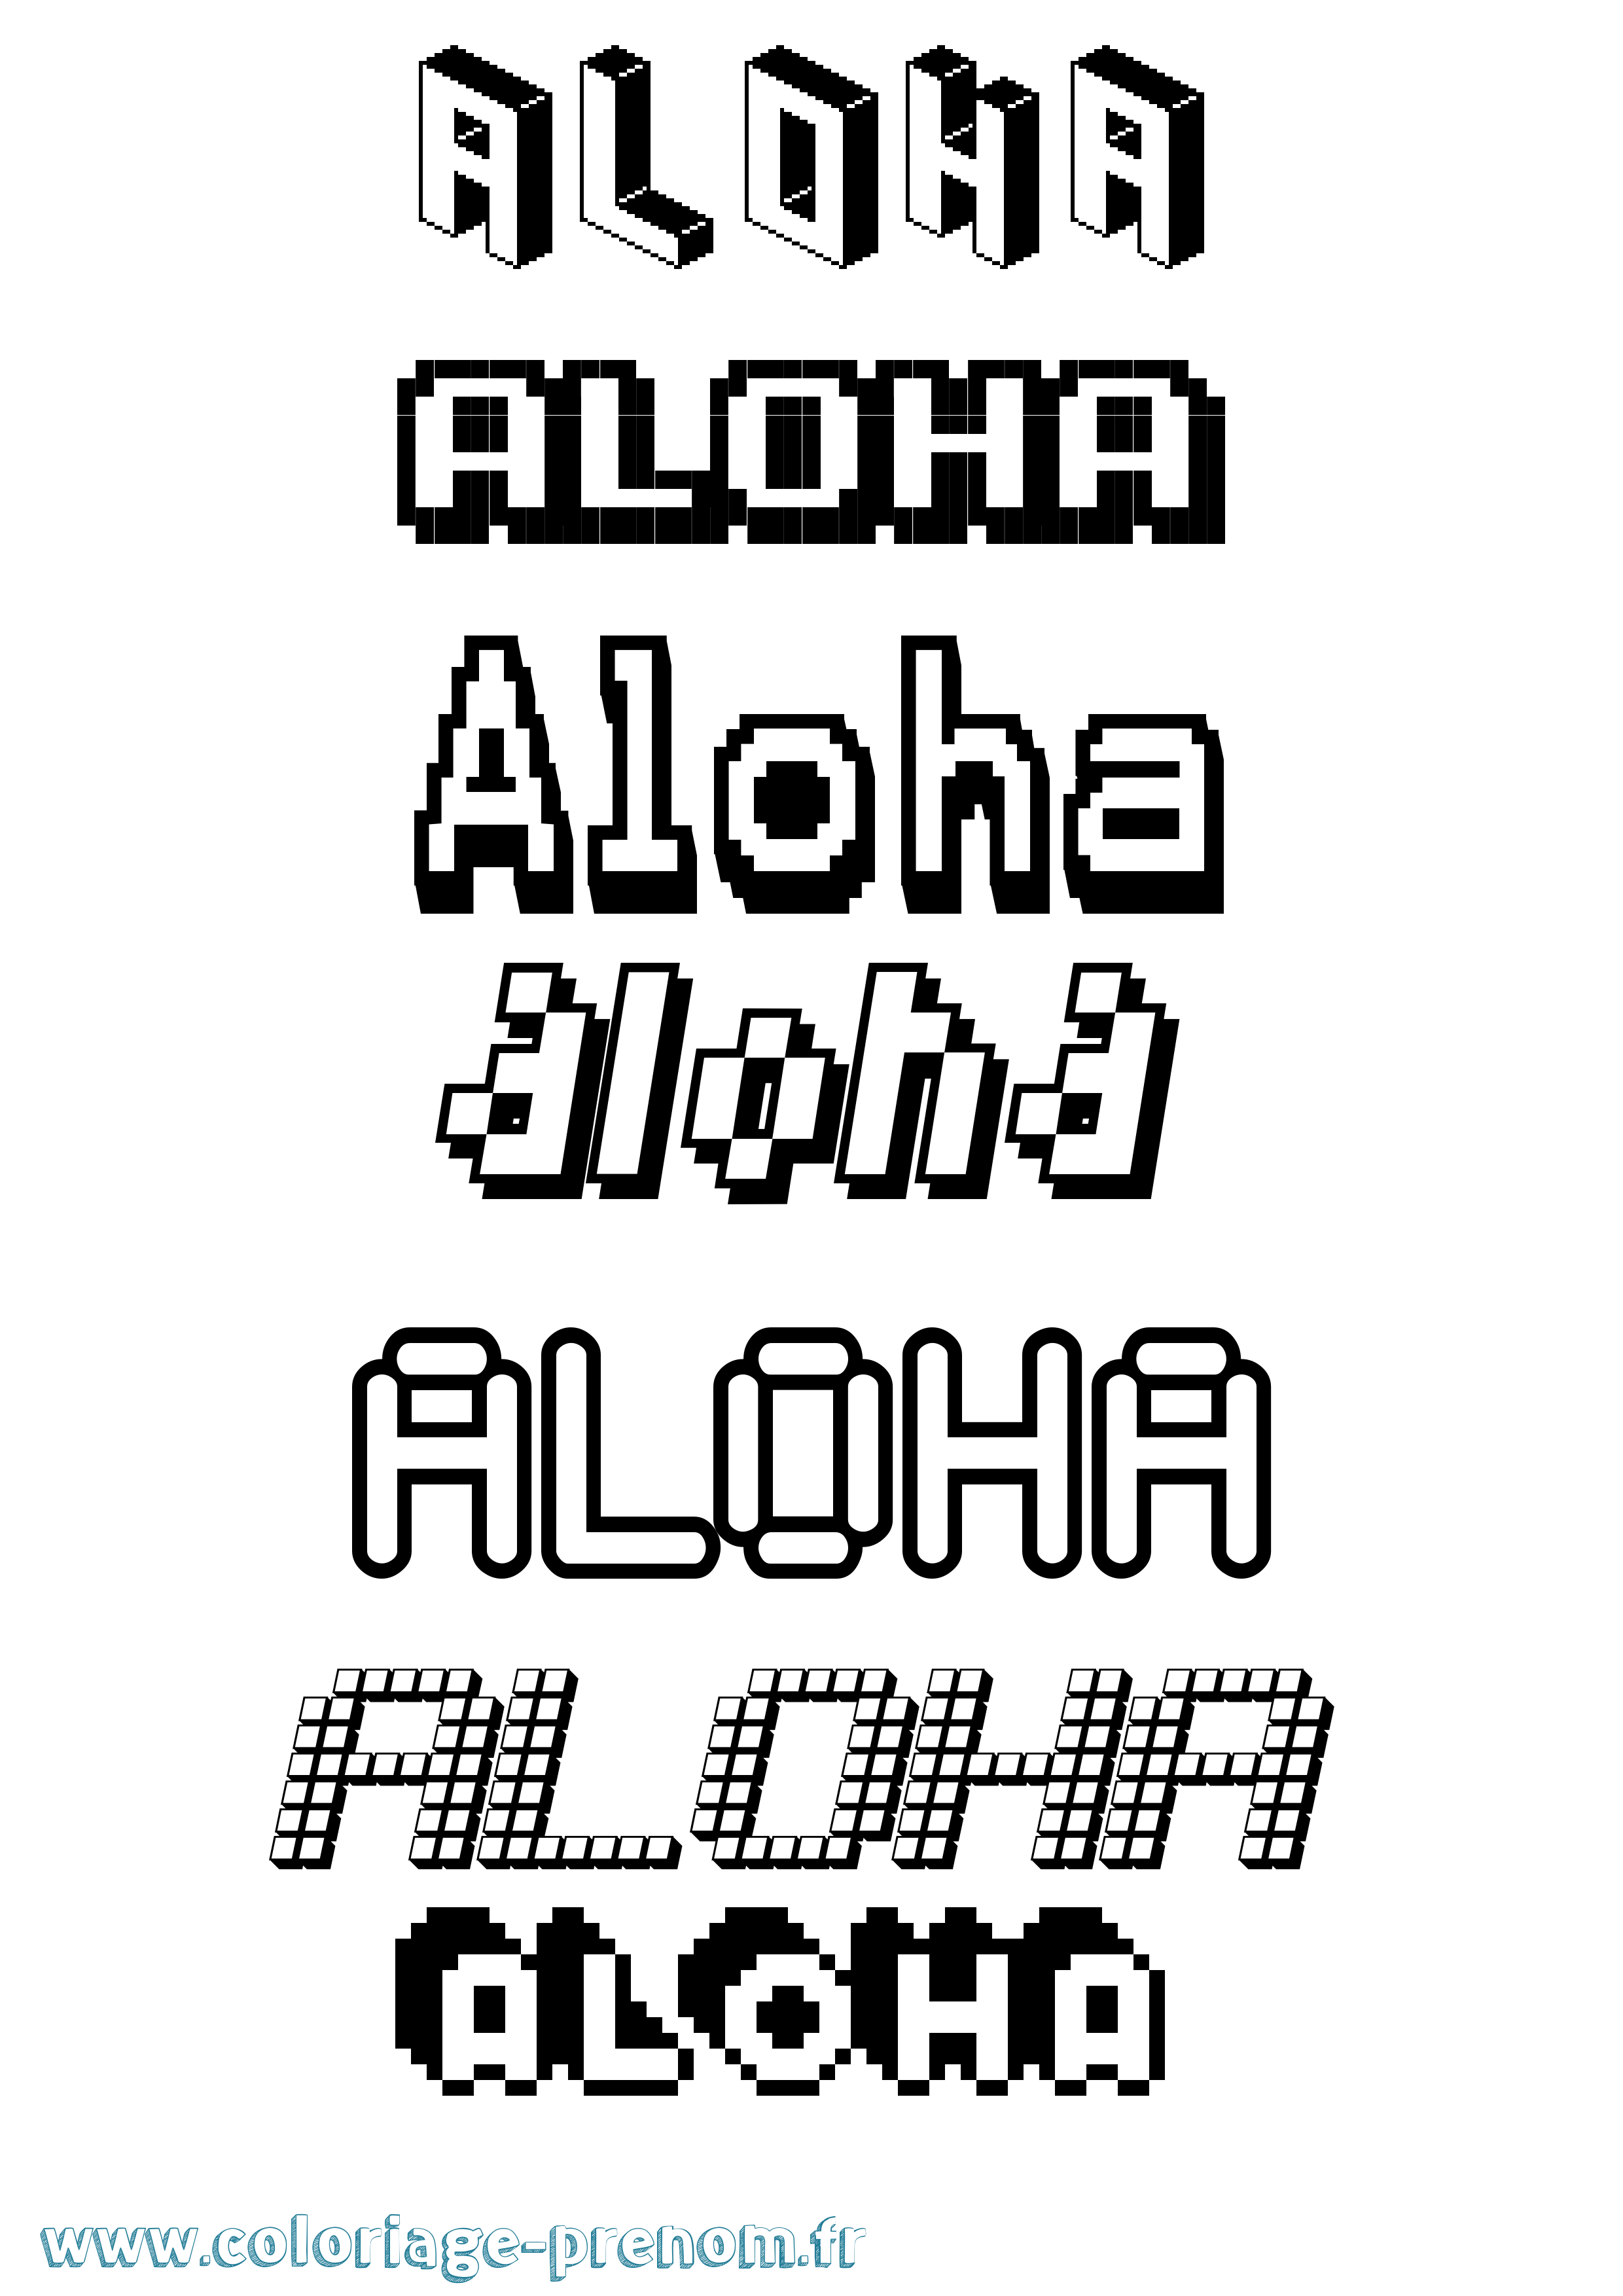 Coloriage prénom Aloha Pixel